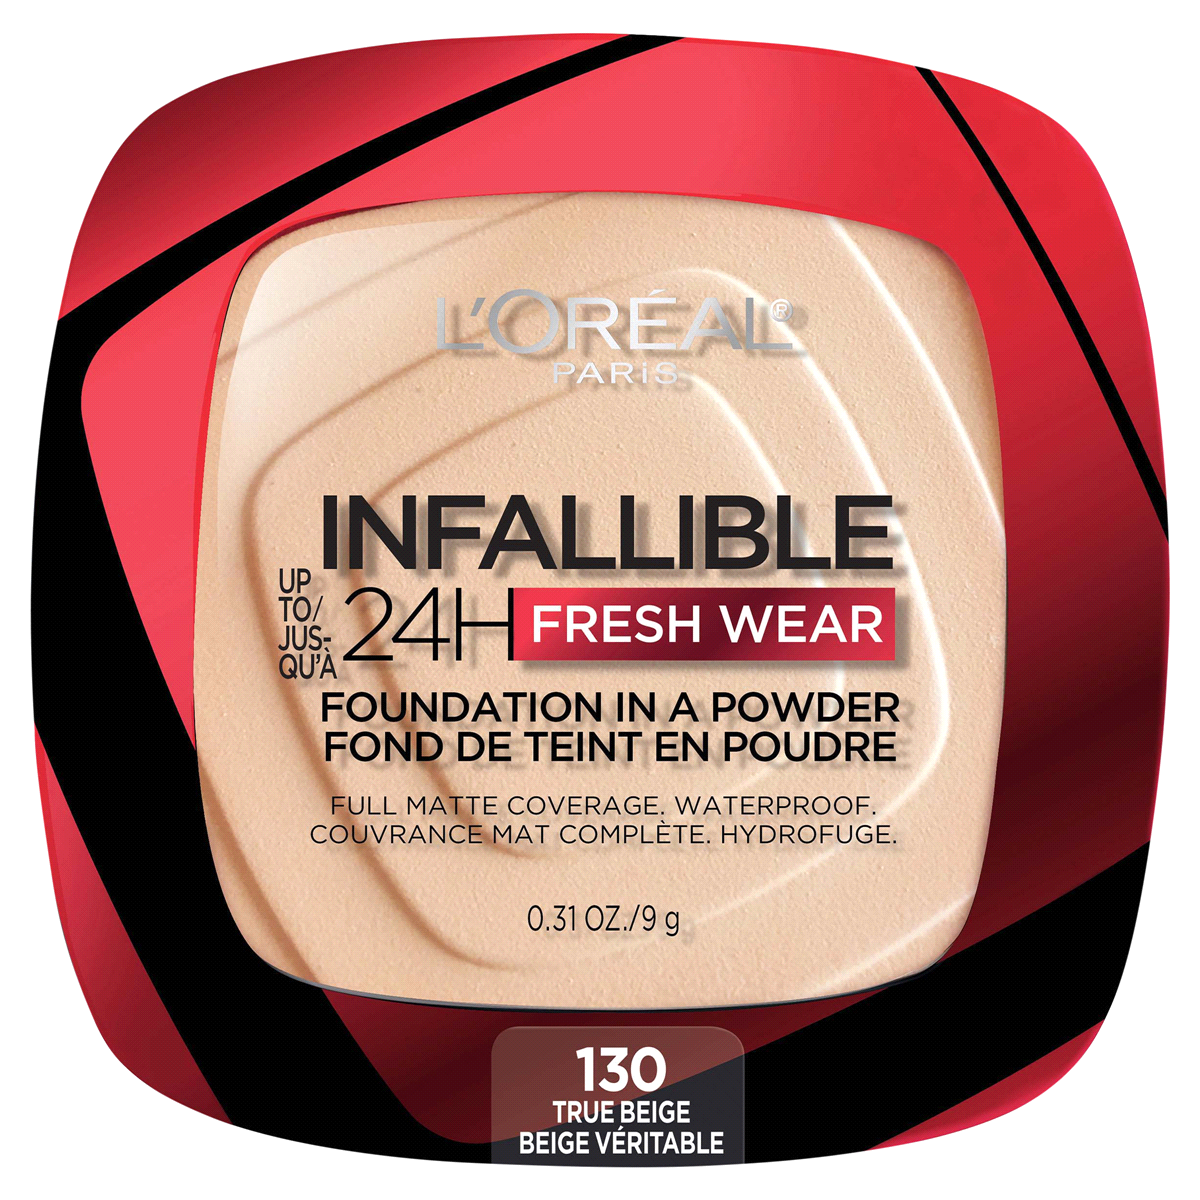 slide 1 of 2, L'Oréal L'Oreal Up to 24H Fresh Wear Foundation-in-a-Powder - True Beige (130), 0.31 oz